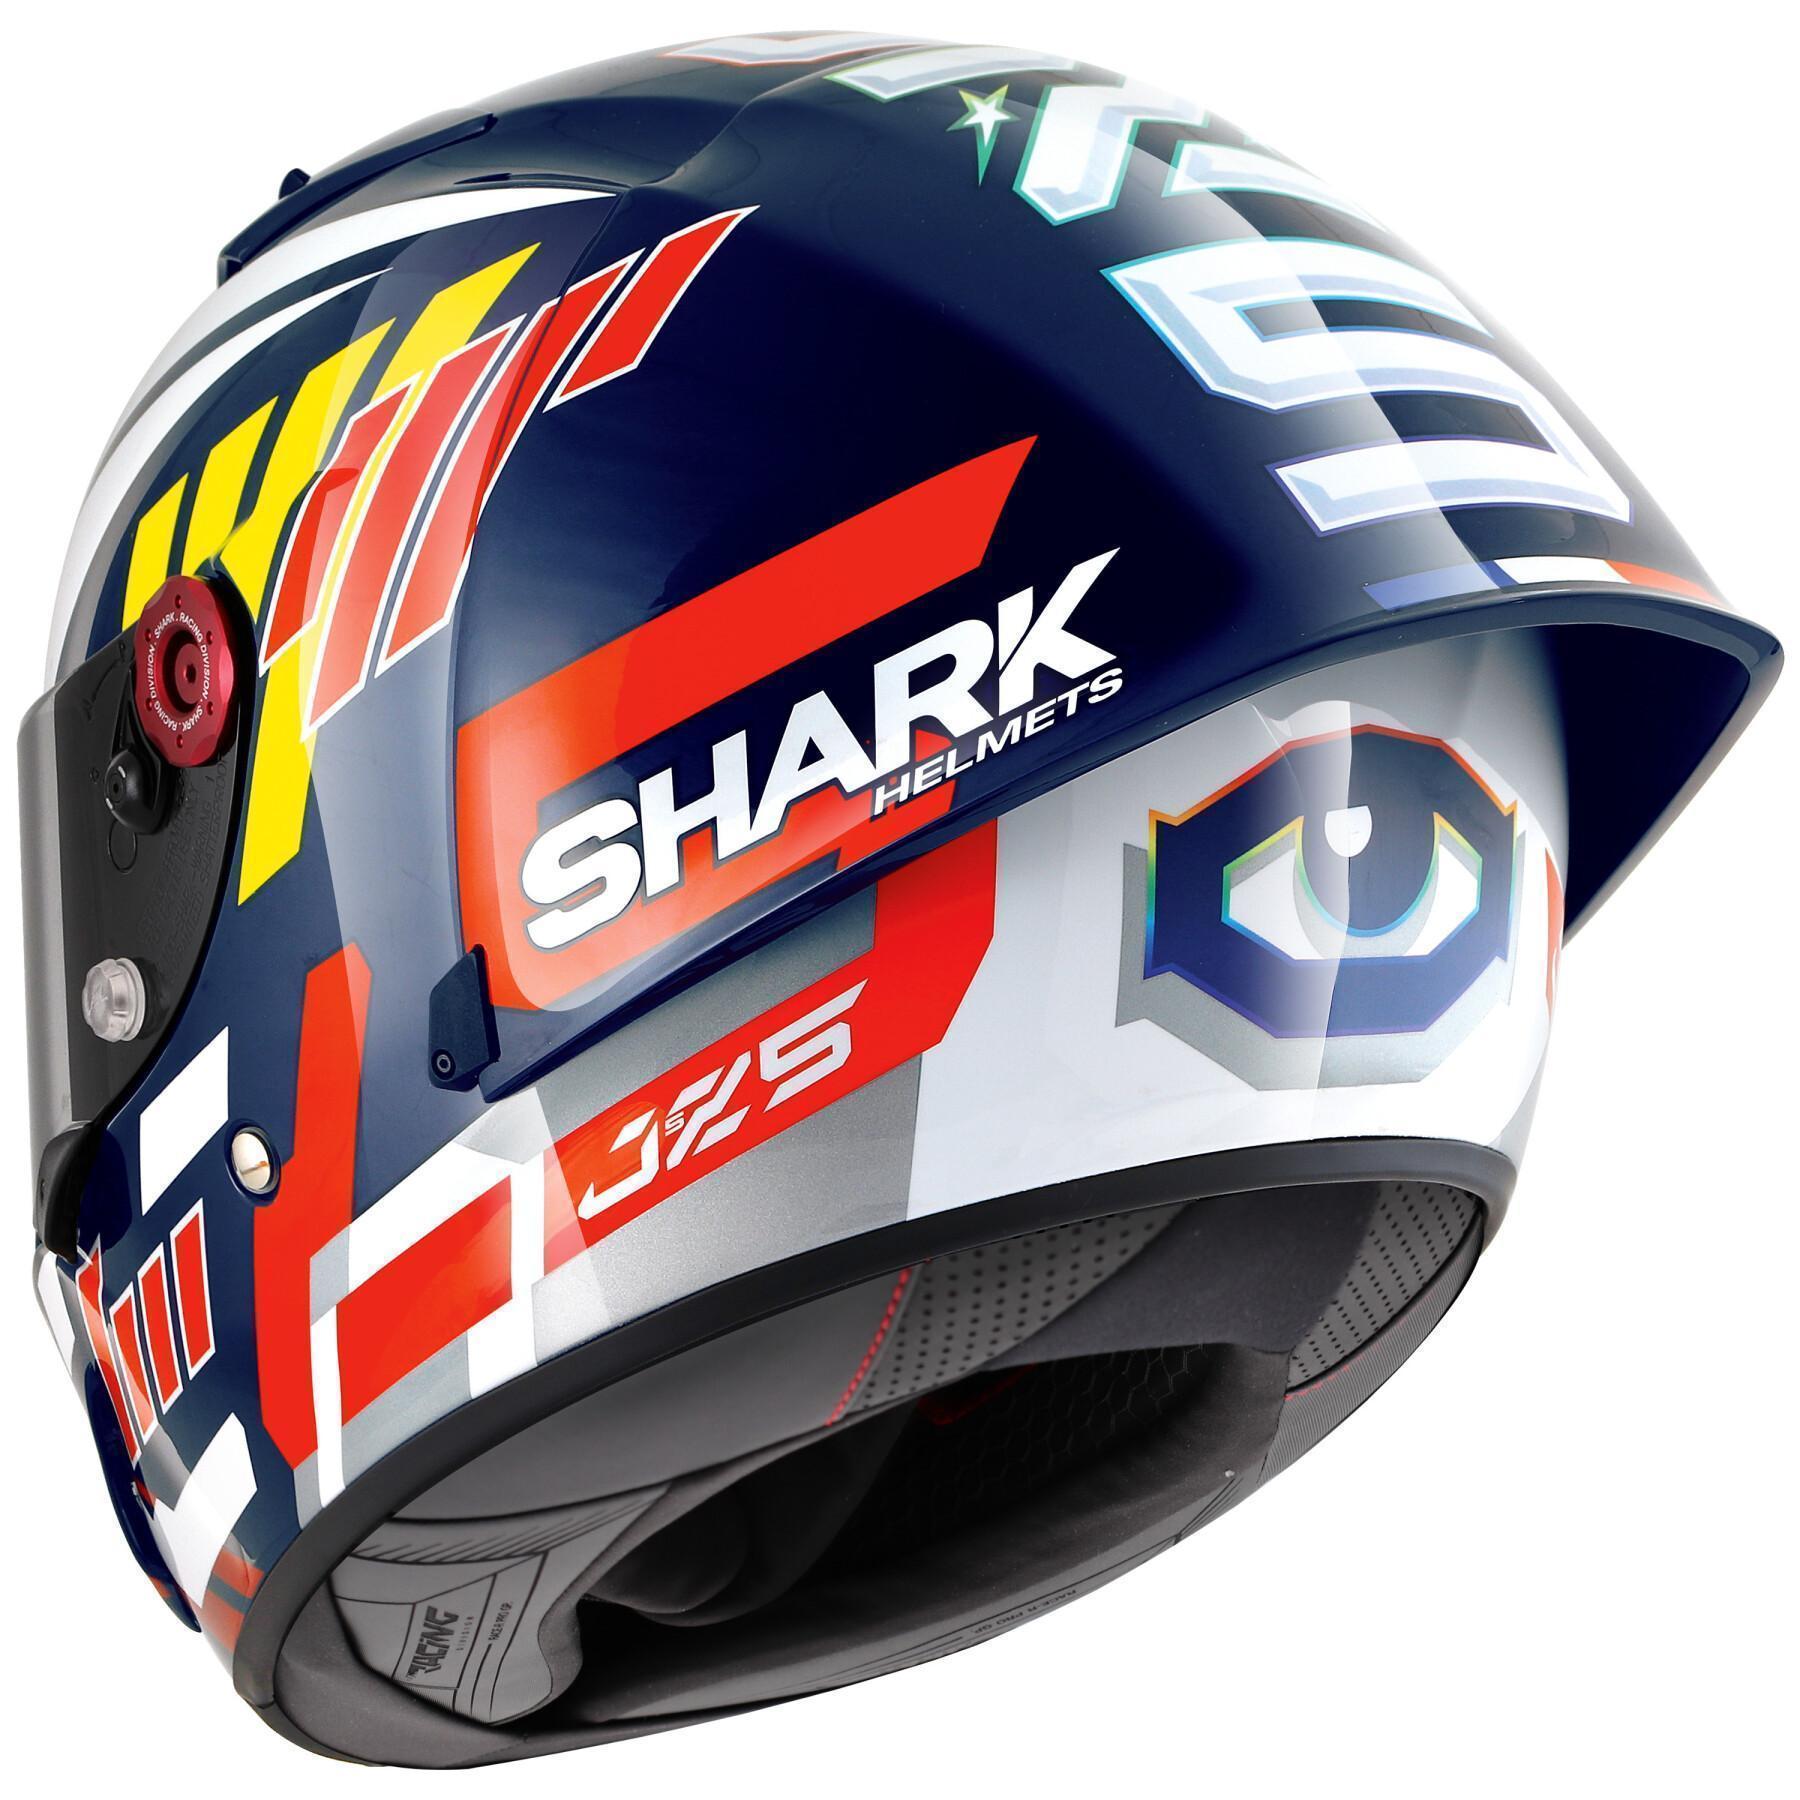 Full face motorcycle helmet Shark race-r pro GP zarco signature